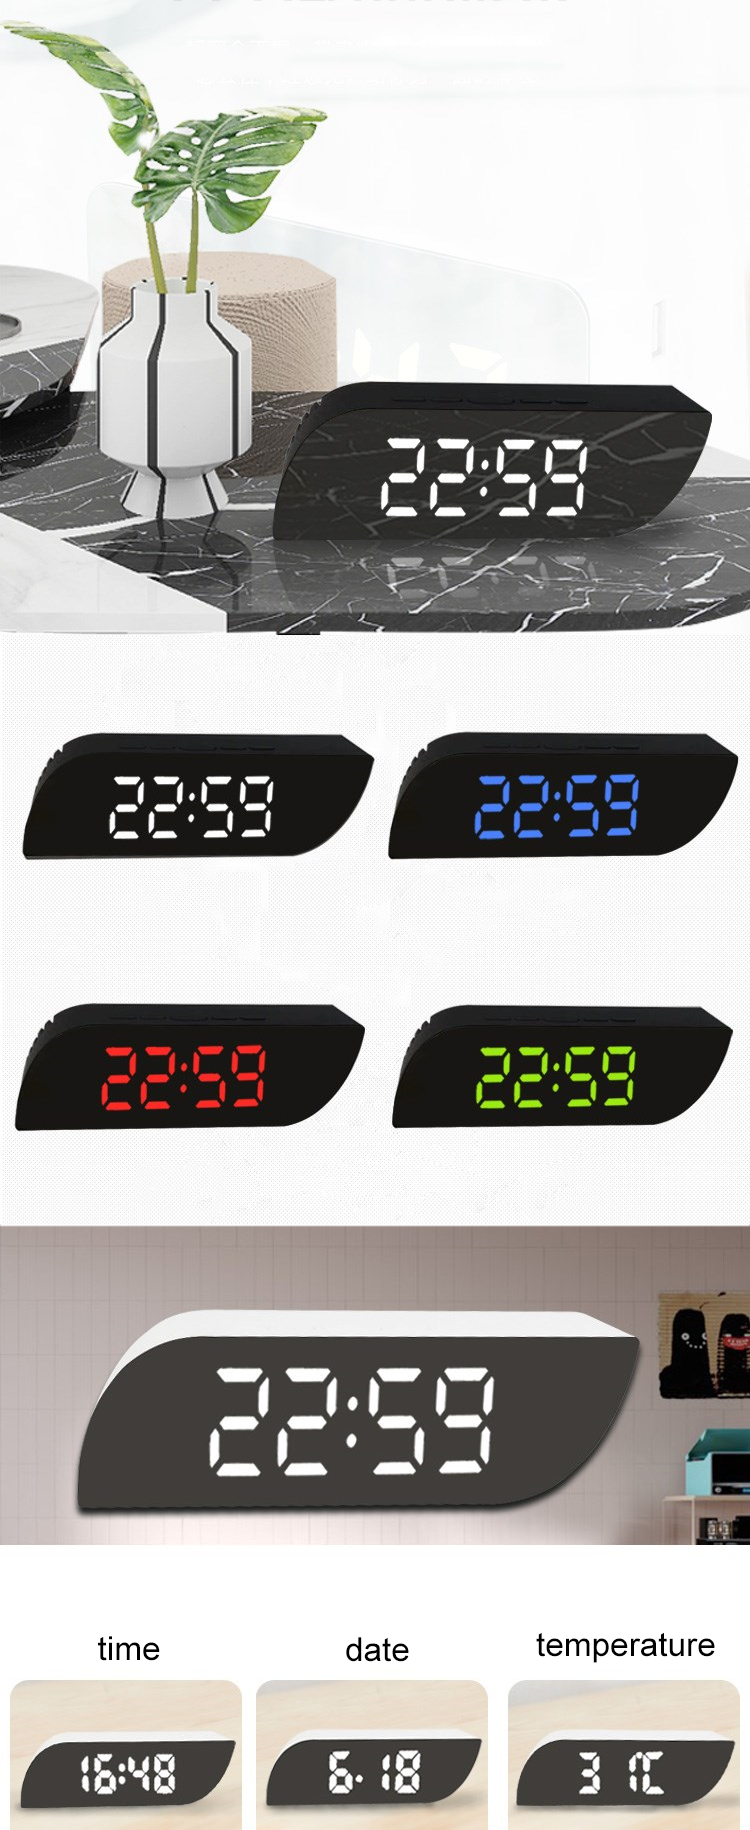 Digital-LED-Trapezoidal-Mirror-Alarm-Clock-Time-Date-Temperature-Cyclically-Display-Calendar-Snooze--1607934-1